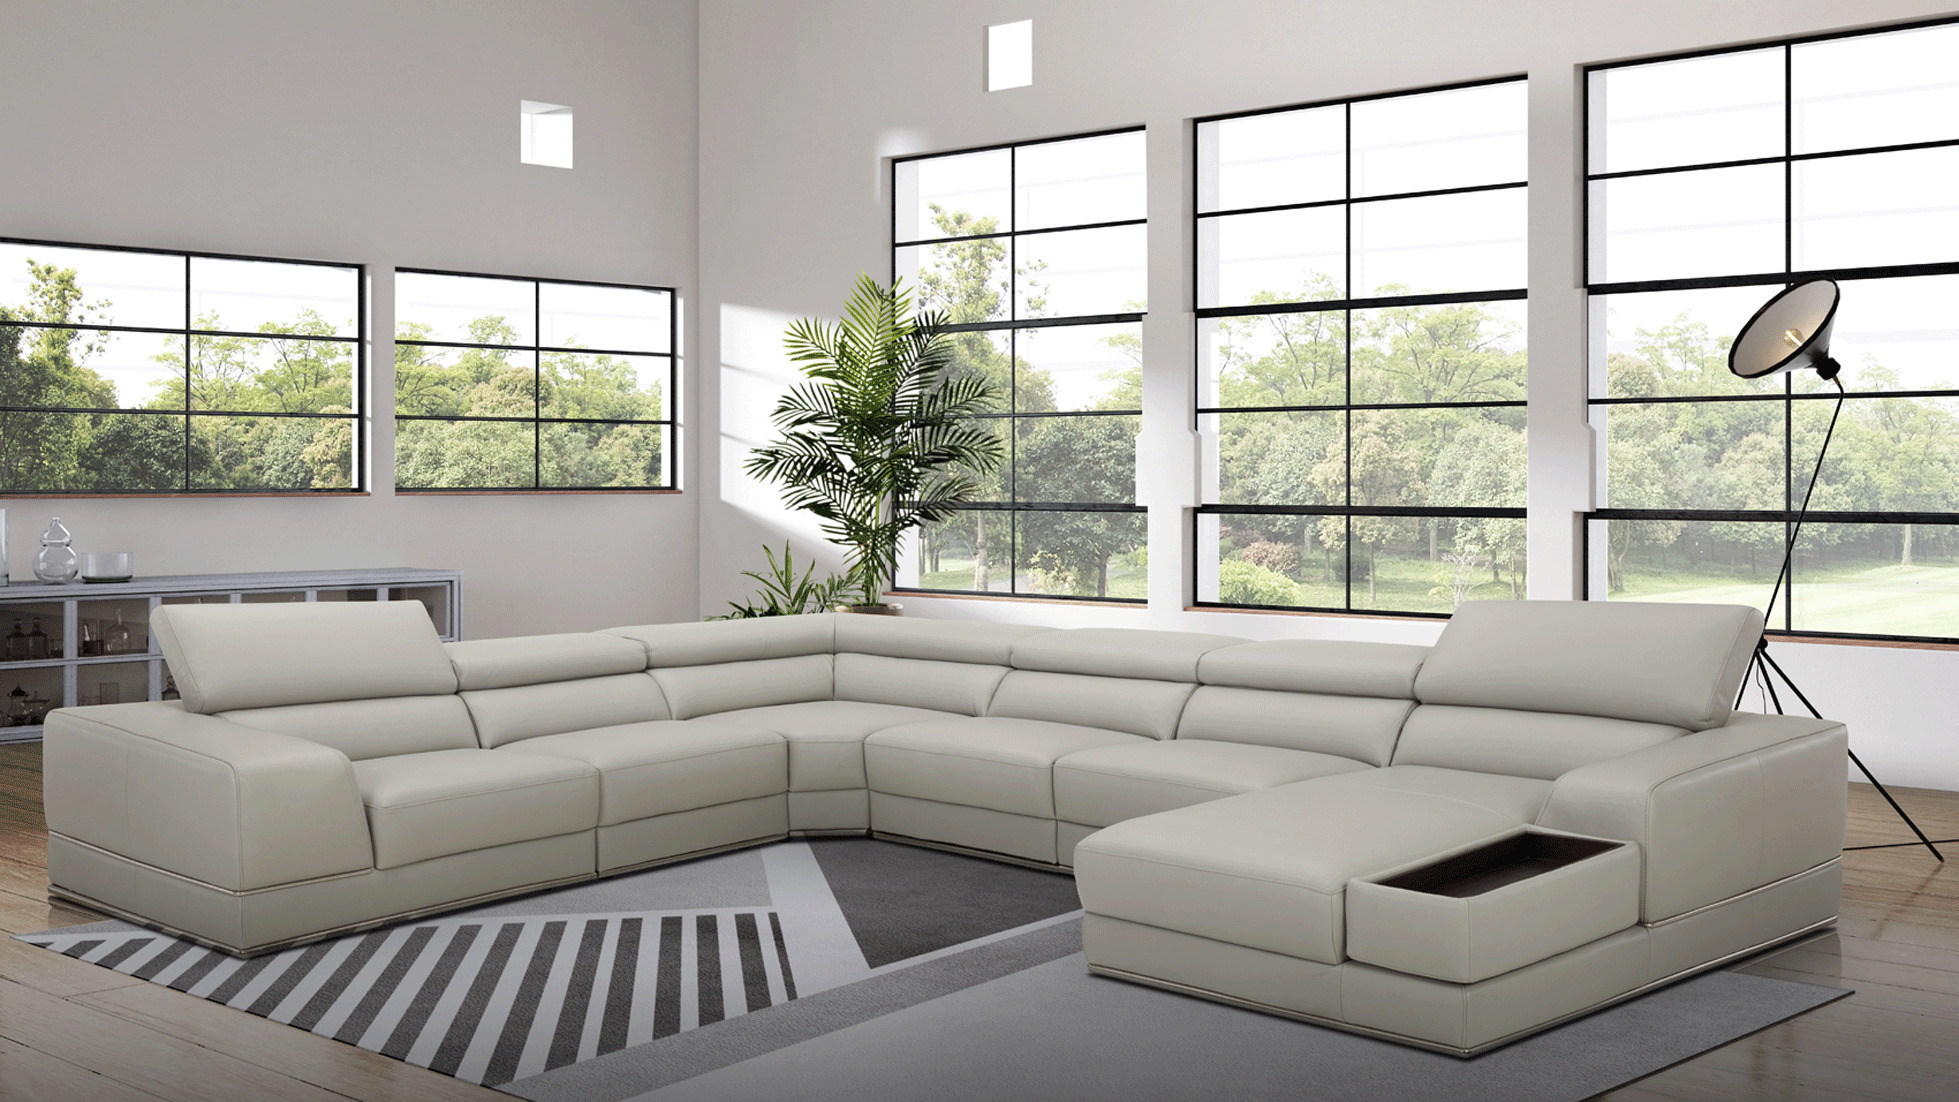 Elegant Italian Leather Living Room